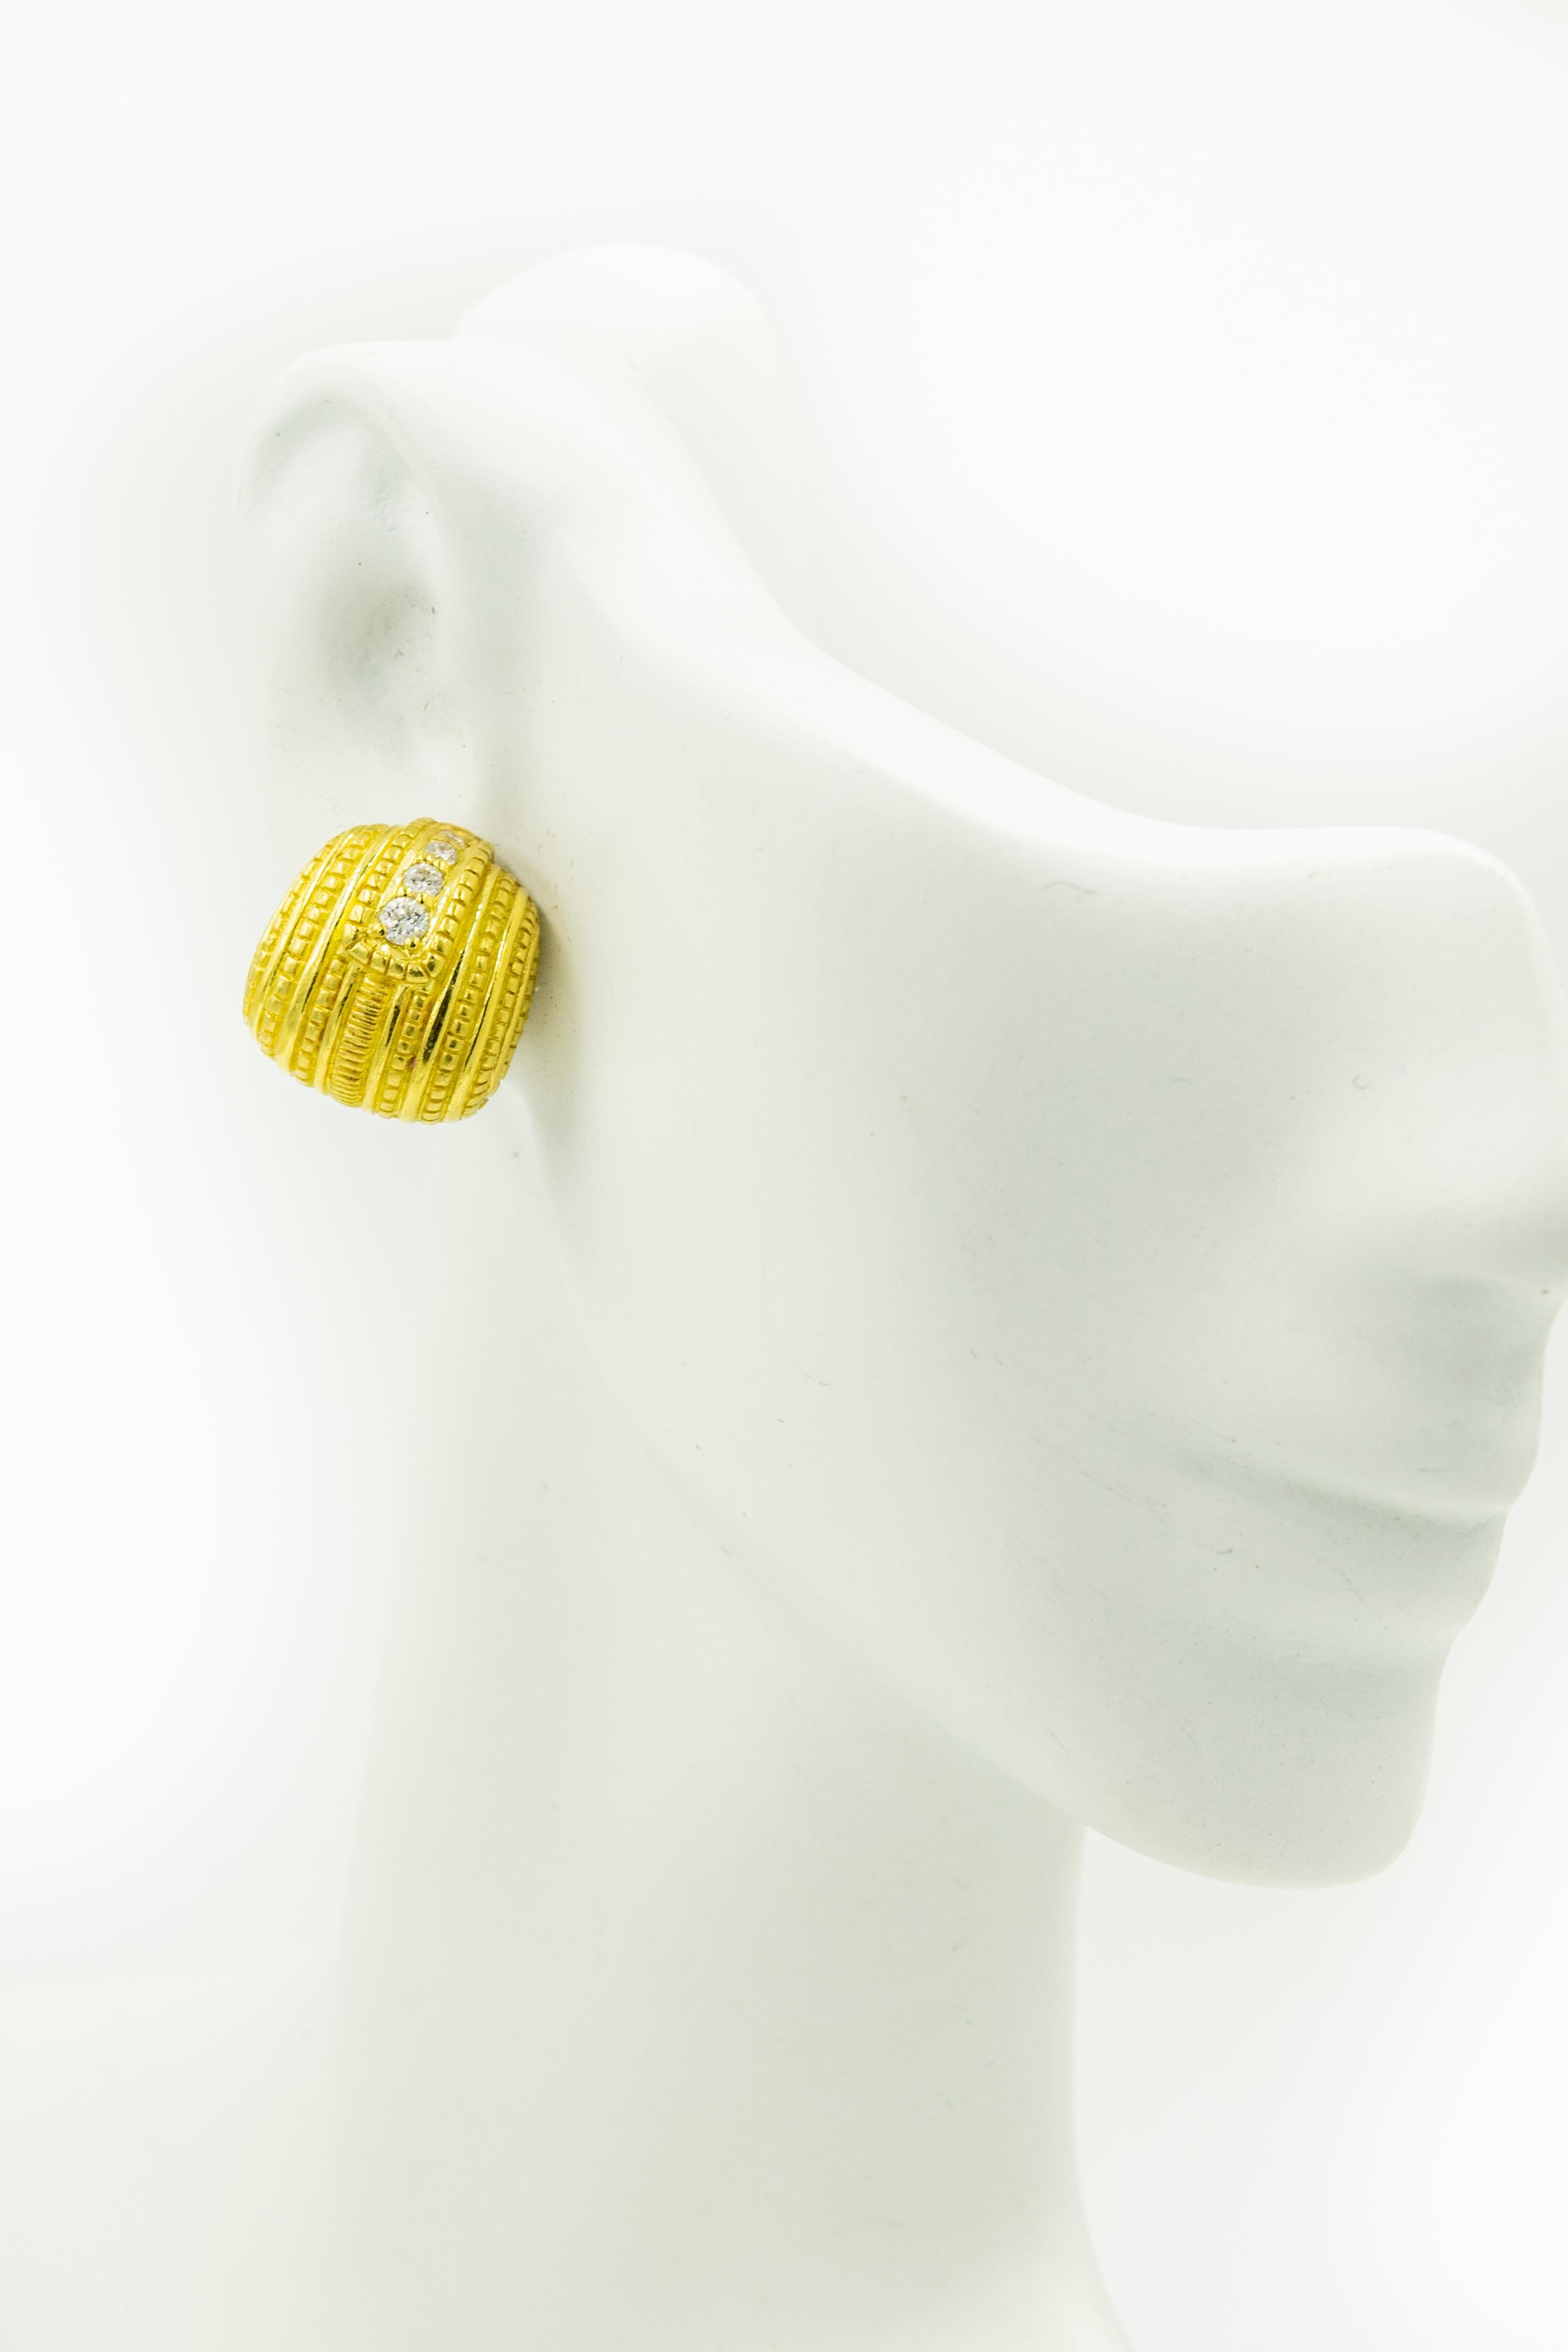 Round Cut Judith Ripka Diamond Textured 18 Karat Yellow Gold Earrings For Sale